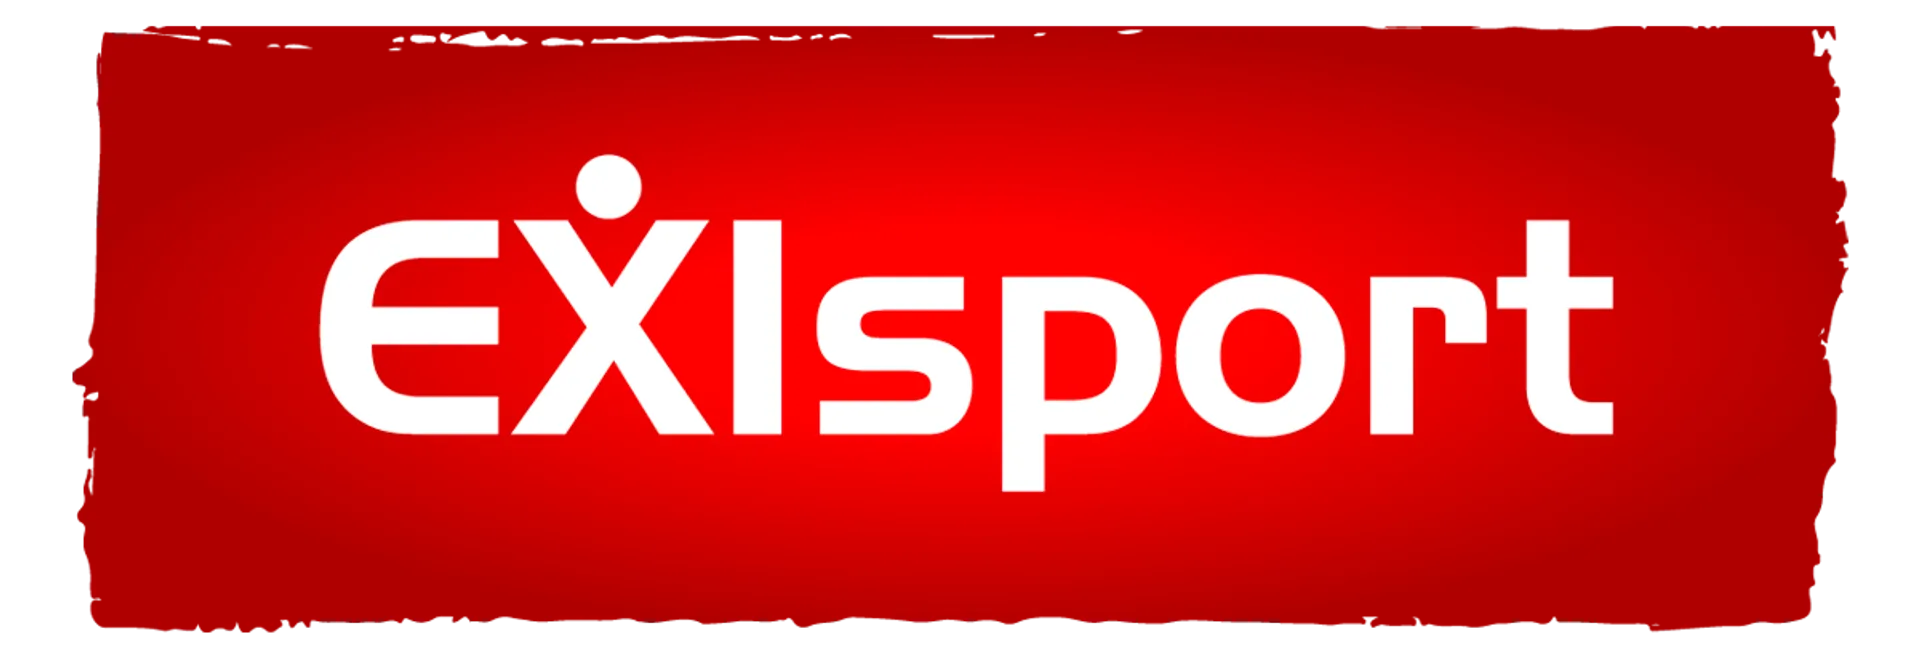 EXISPORT logo